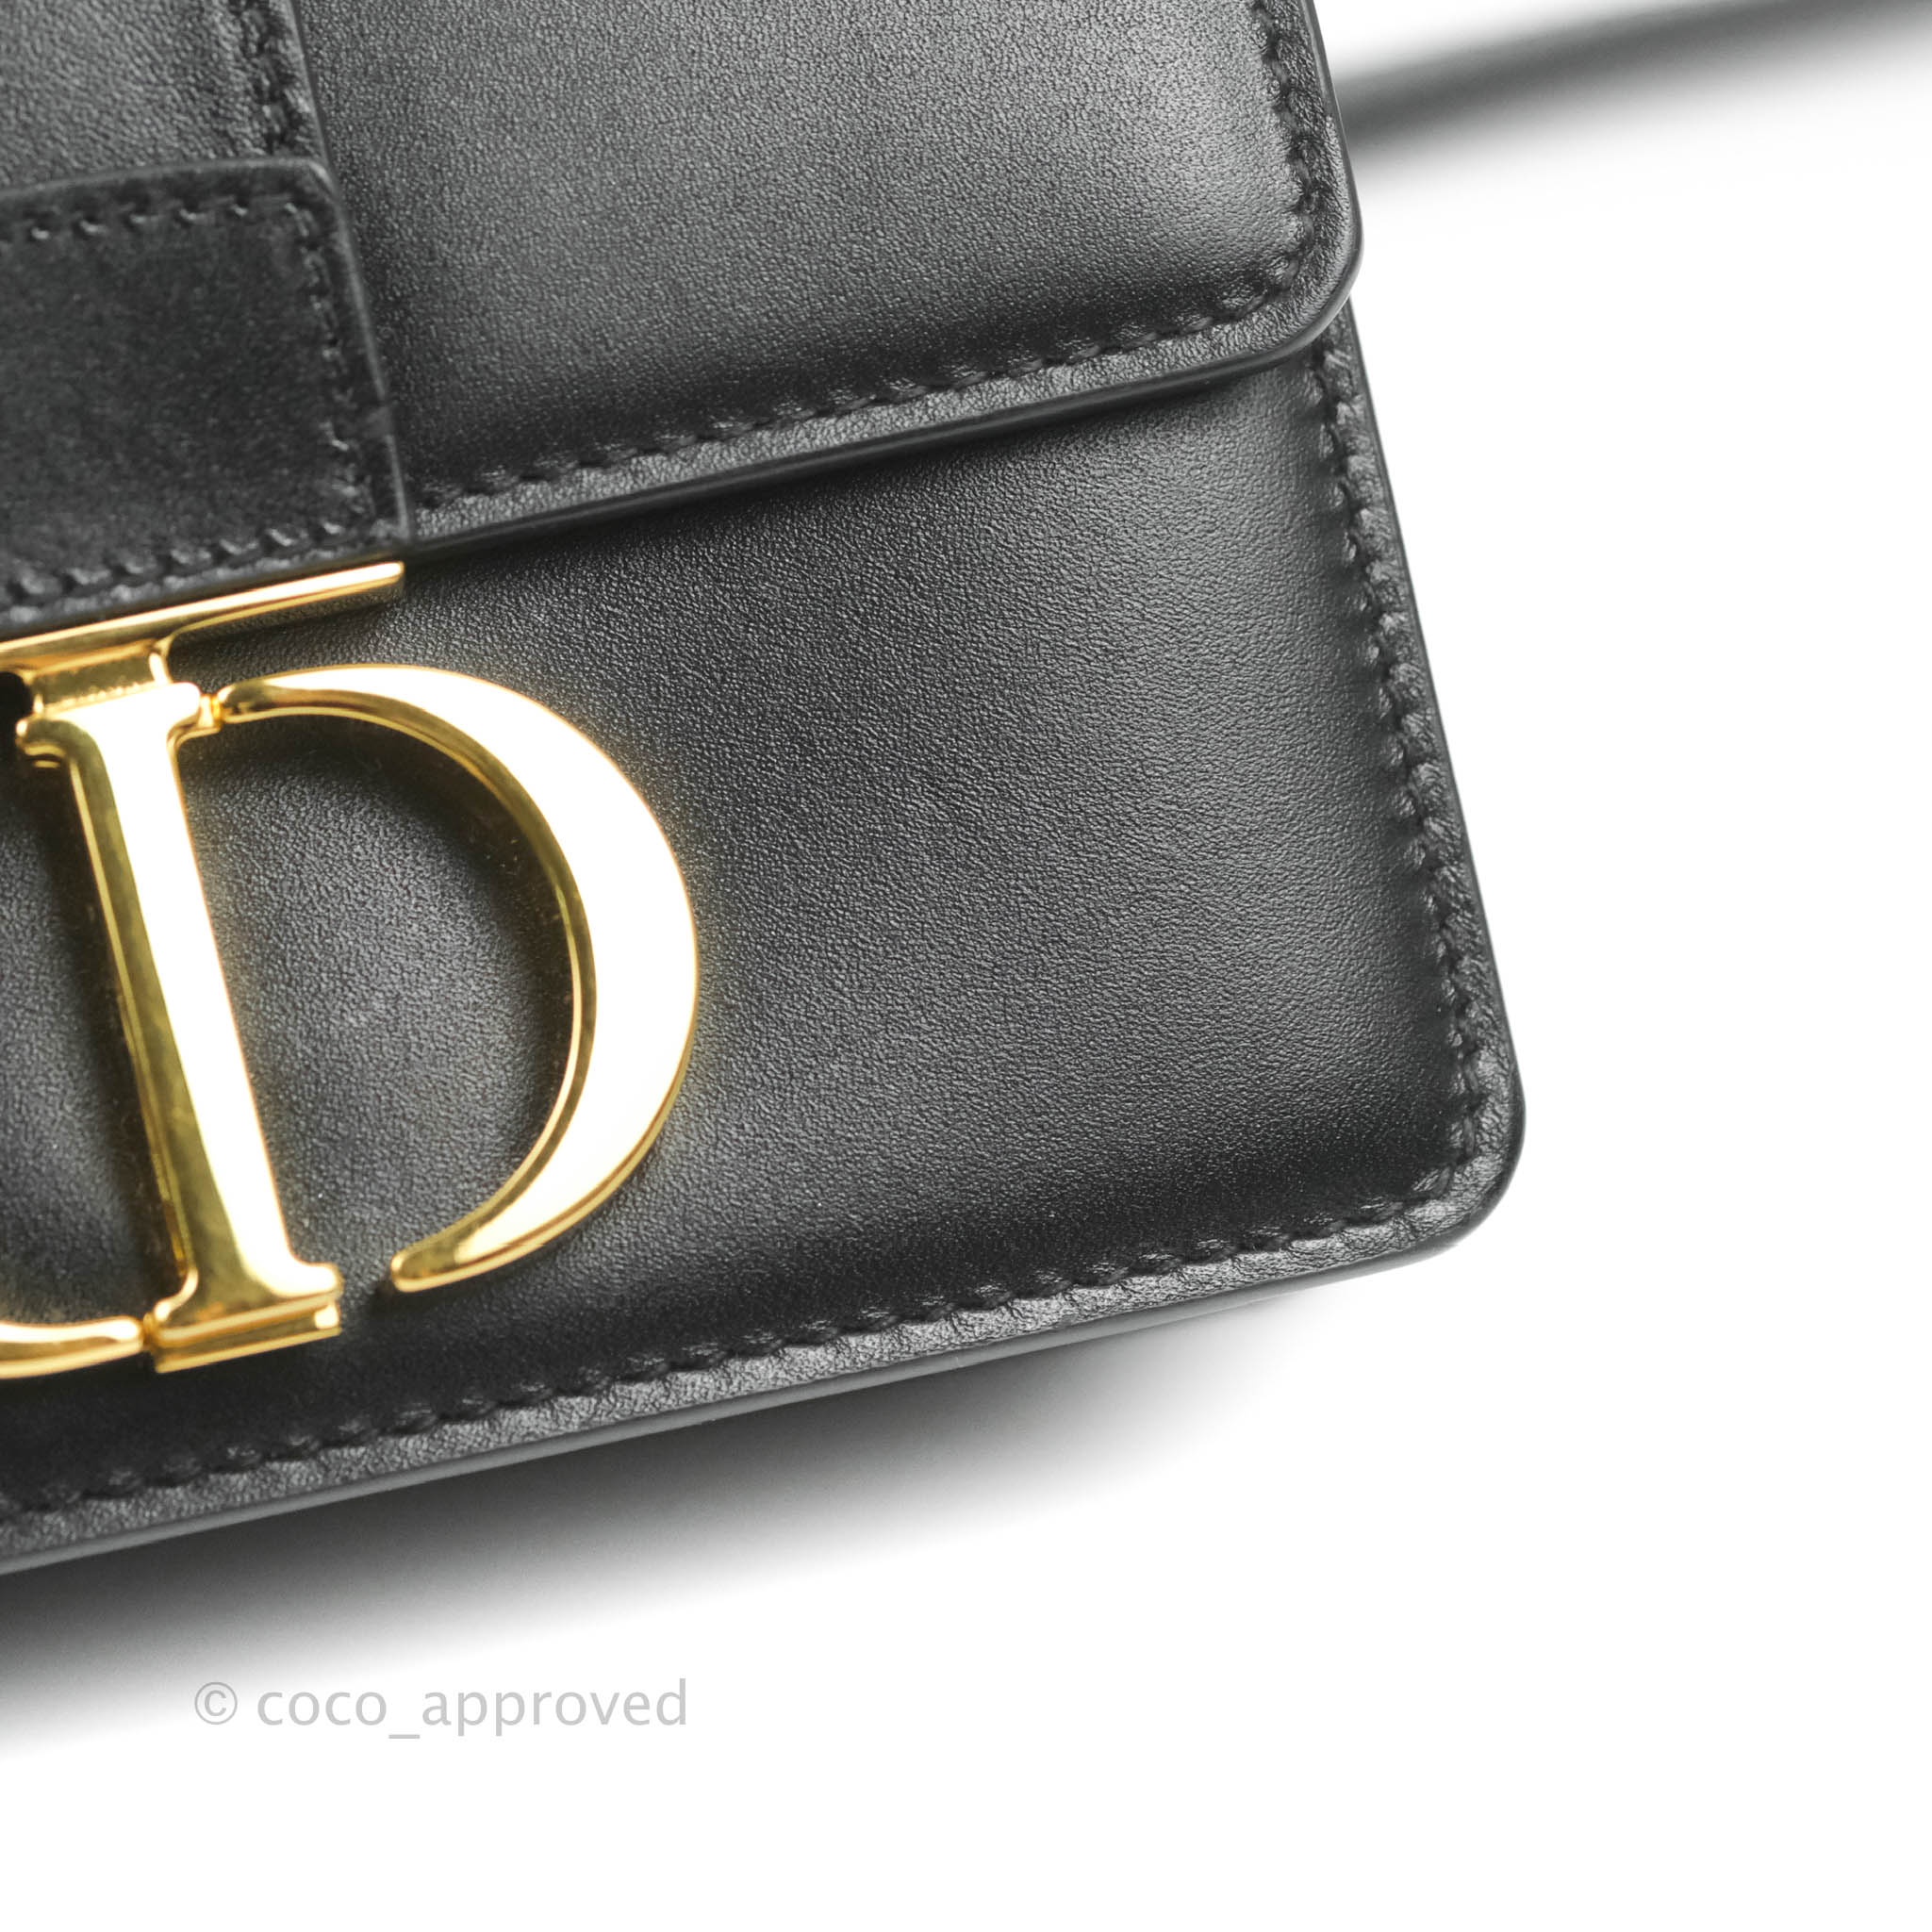 Dior Women 30 Montaigne Chain Bag Metallic Gold Microcannage Calfskin